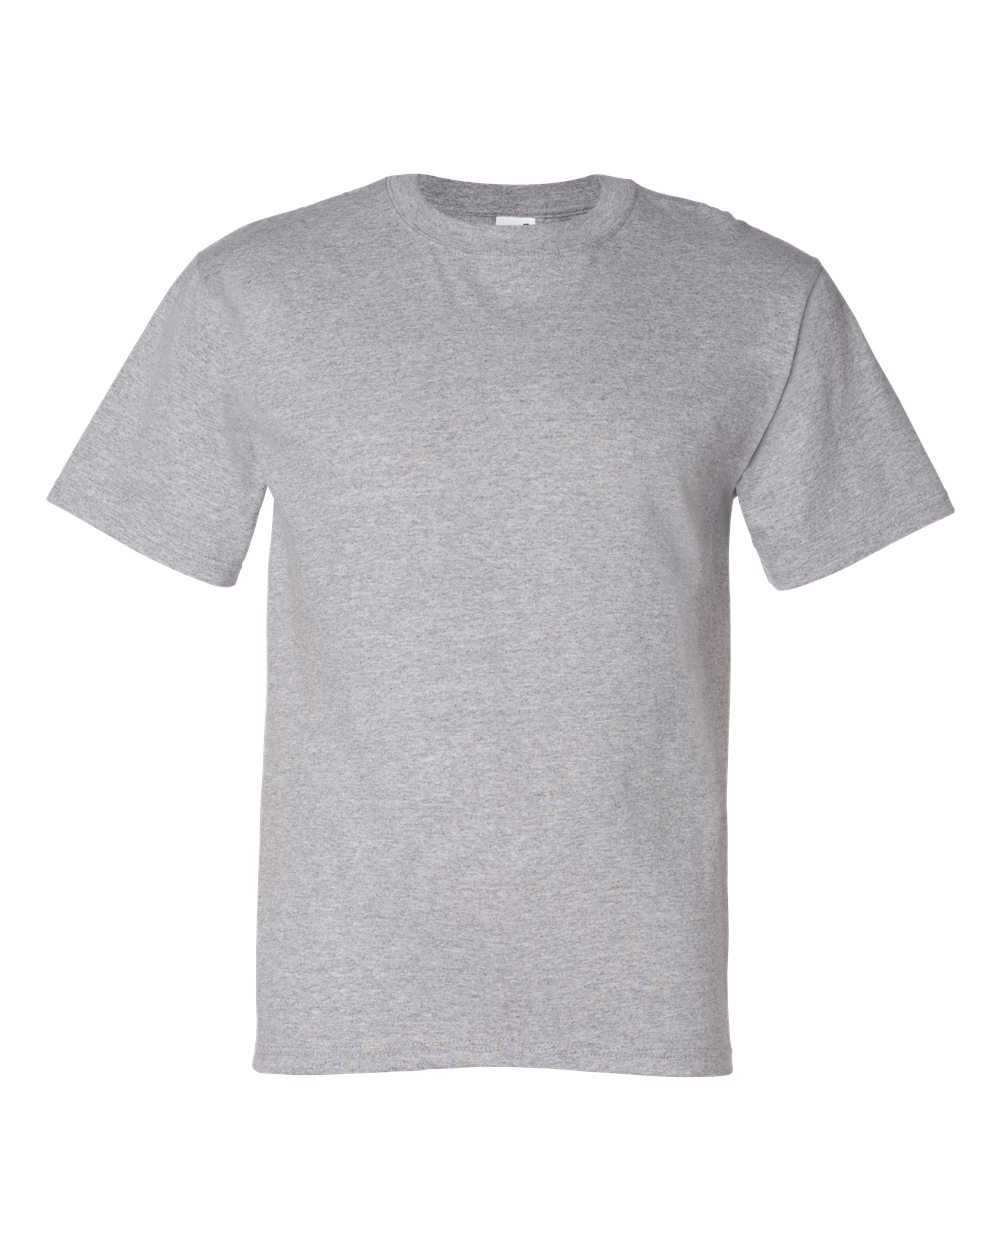 grey-shirt-template